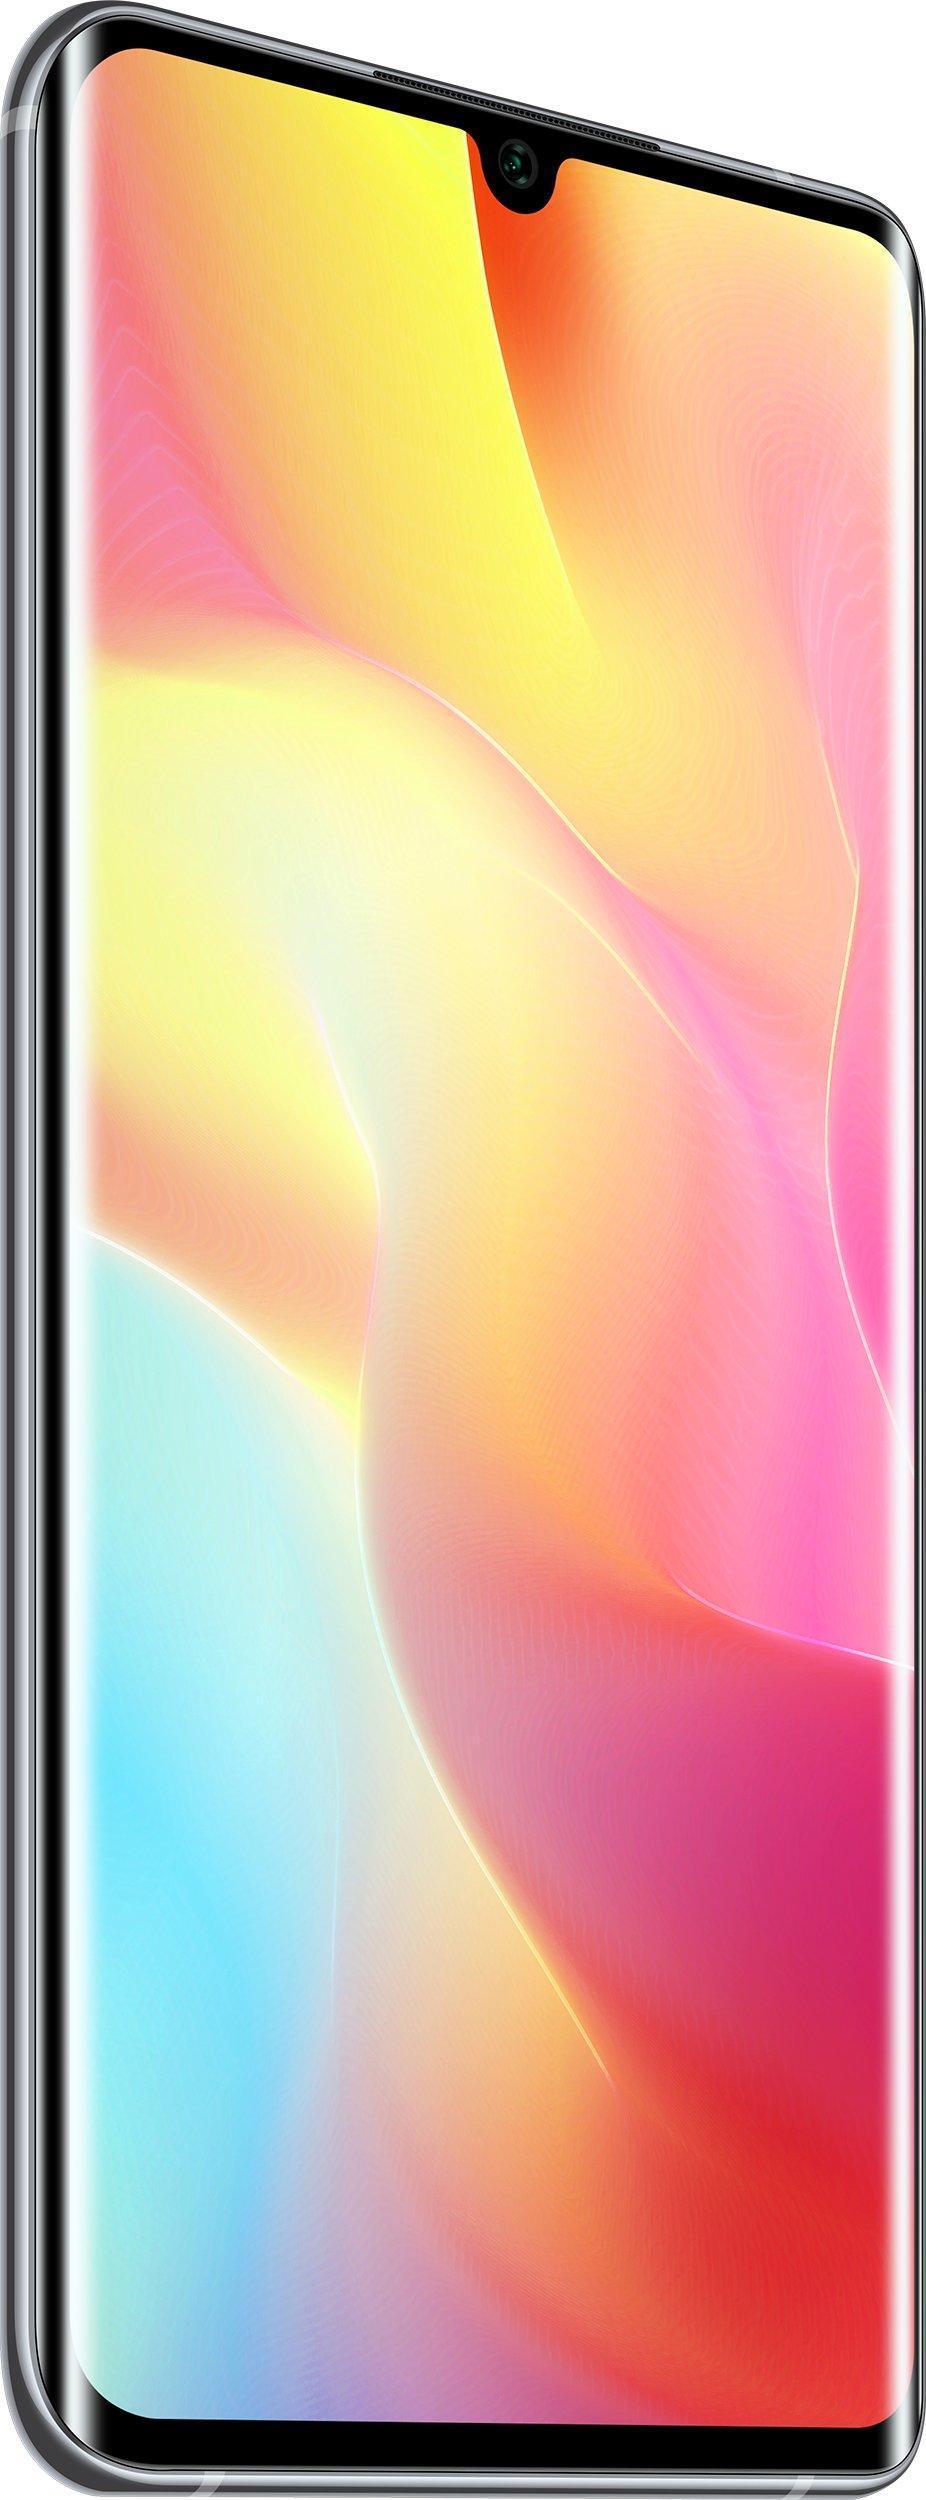 Цена Смартфон Xiaomi Mi Note 10 Lite 6/64Gb White